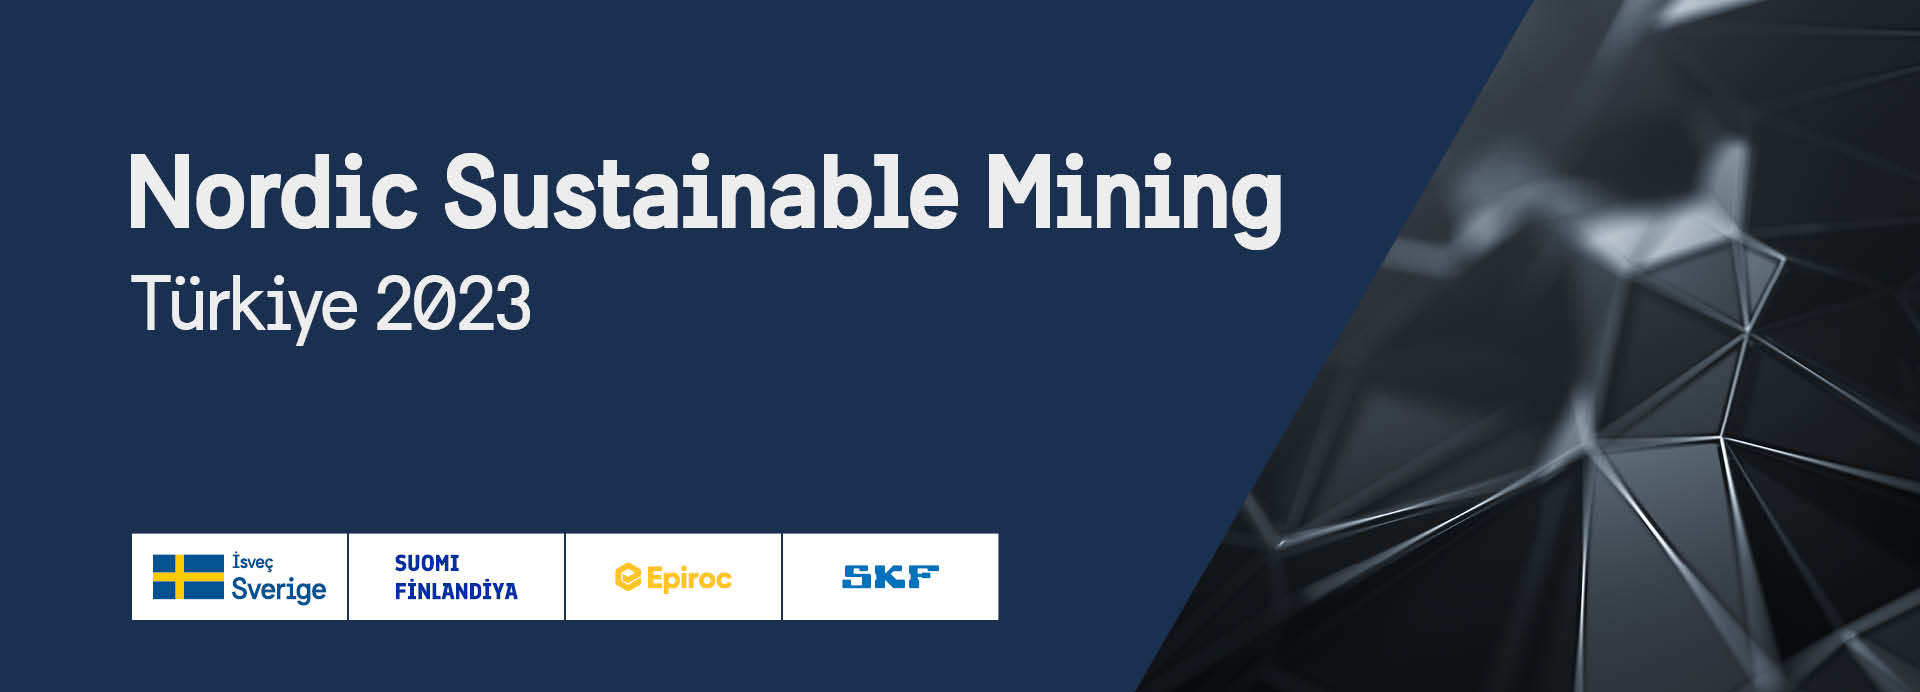 Header image for Nordic Sustainable Mining Türkiye 2023